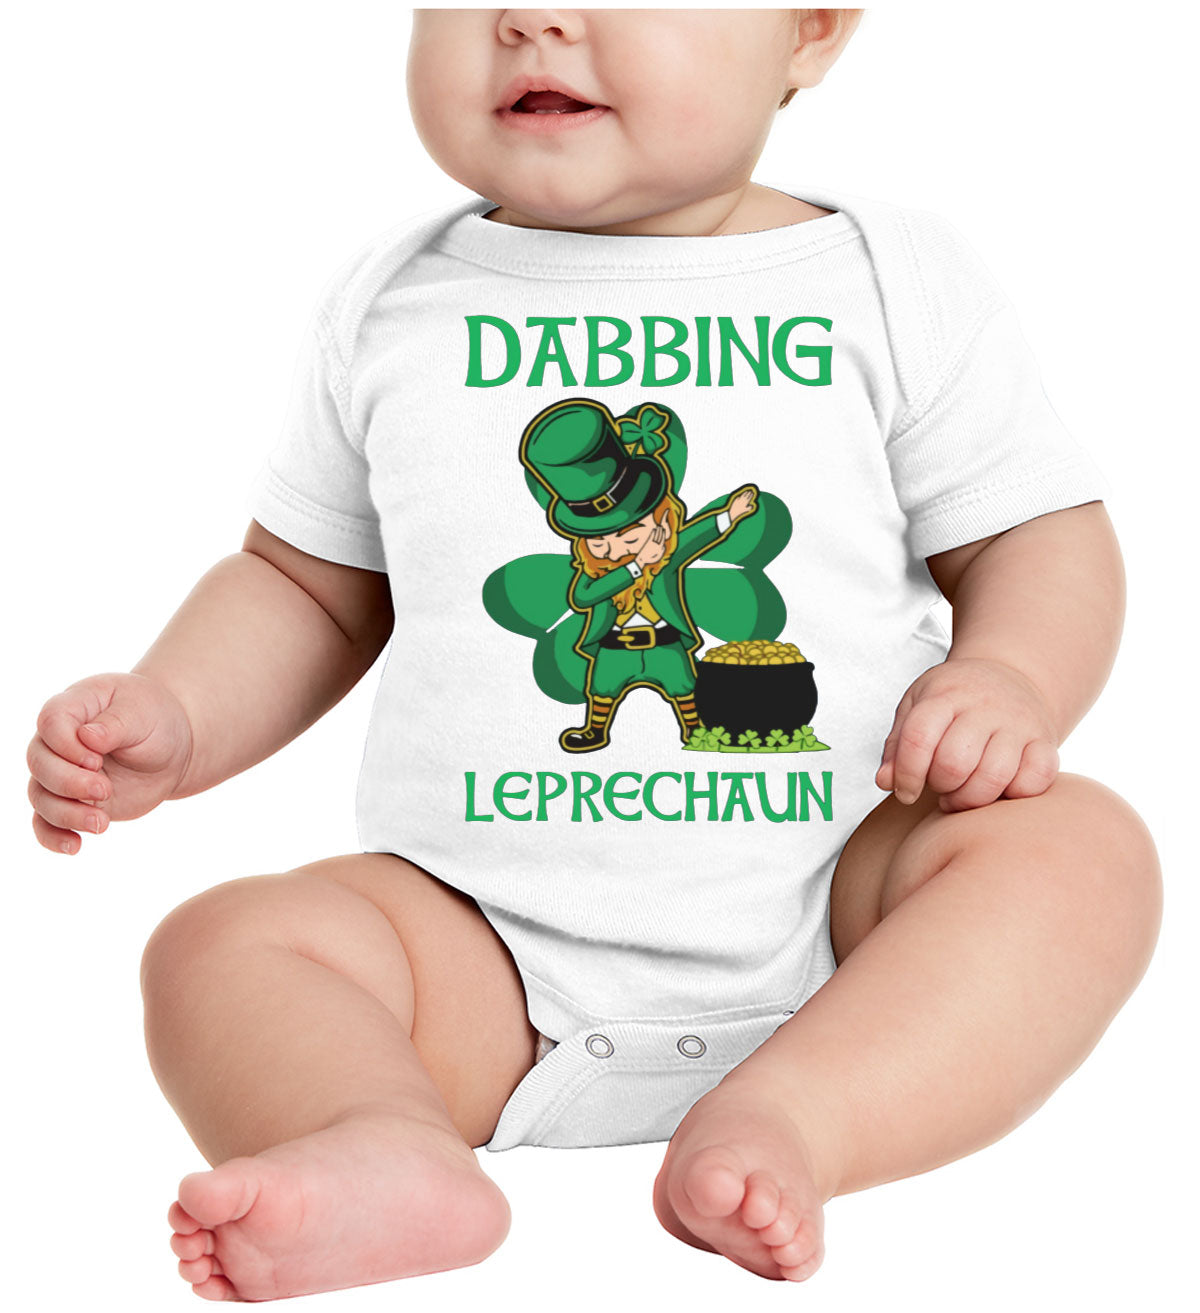 Dabbing Leprechaun St. Patrick's Day Baby Onesie